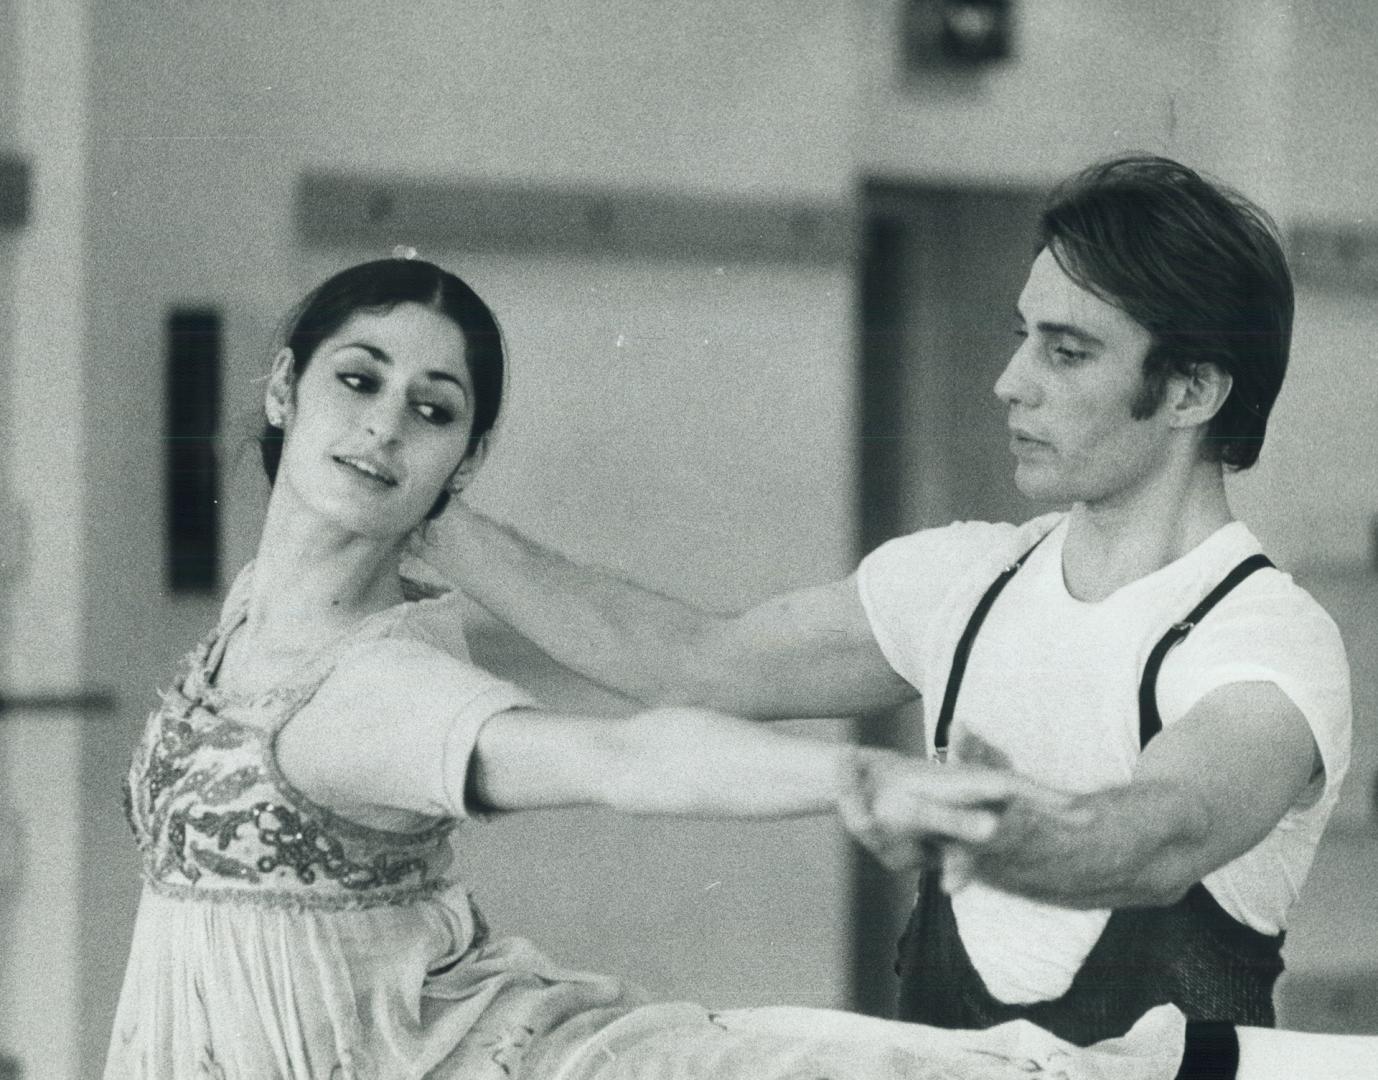 Dancing - Ballet - National Ballet - 1972